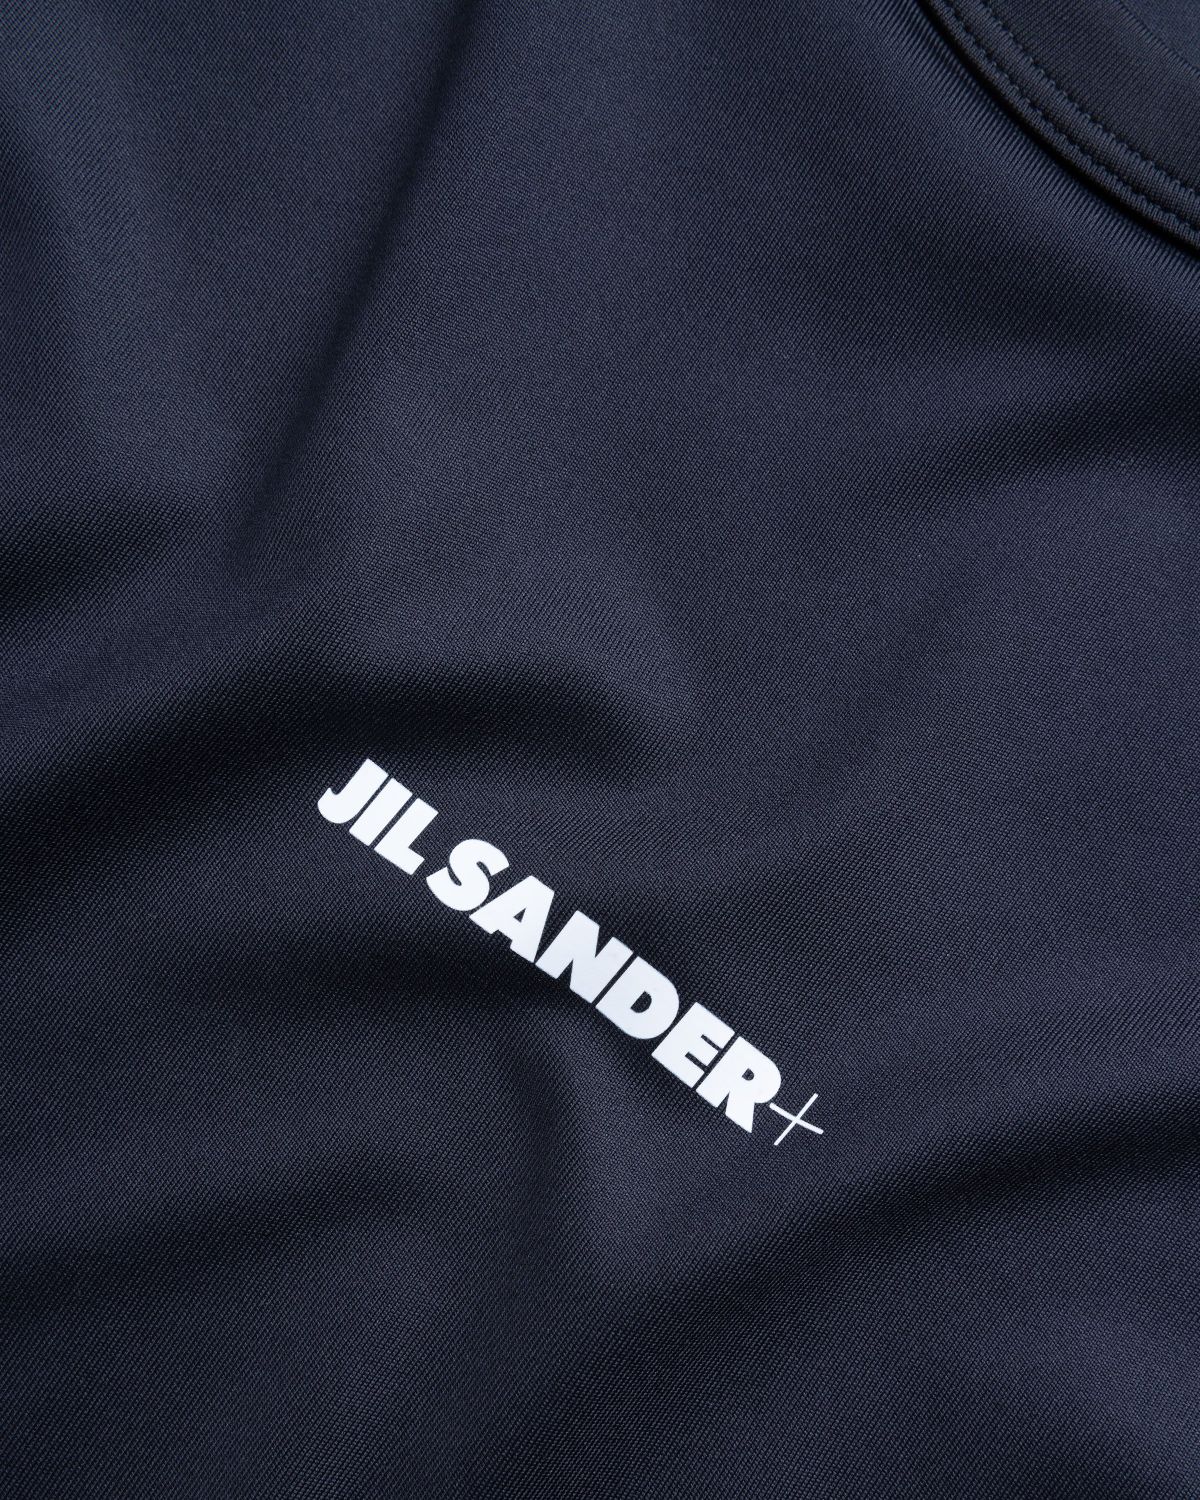 Jil Sander – Logo T-Shirt Black - Tops - Black - Image 6